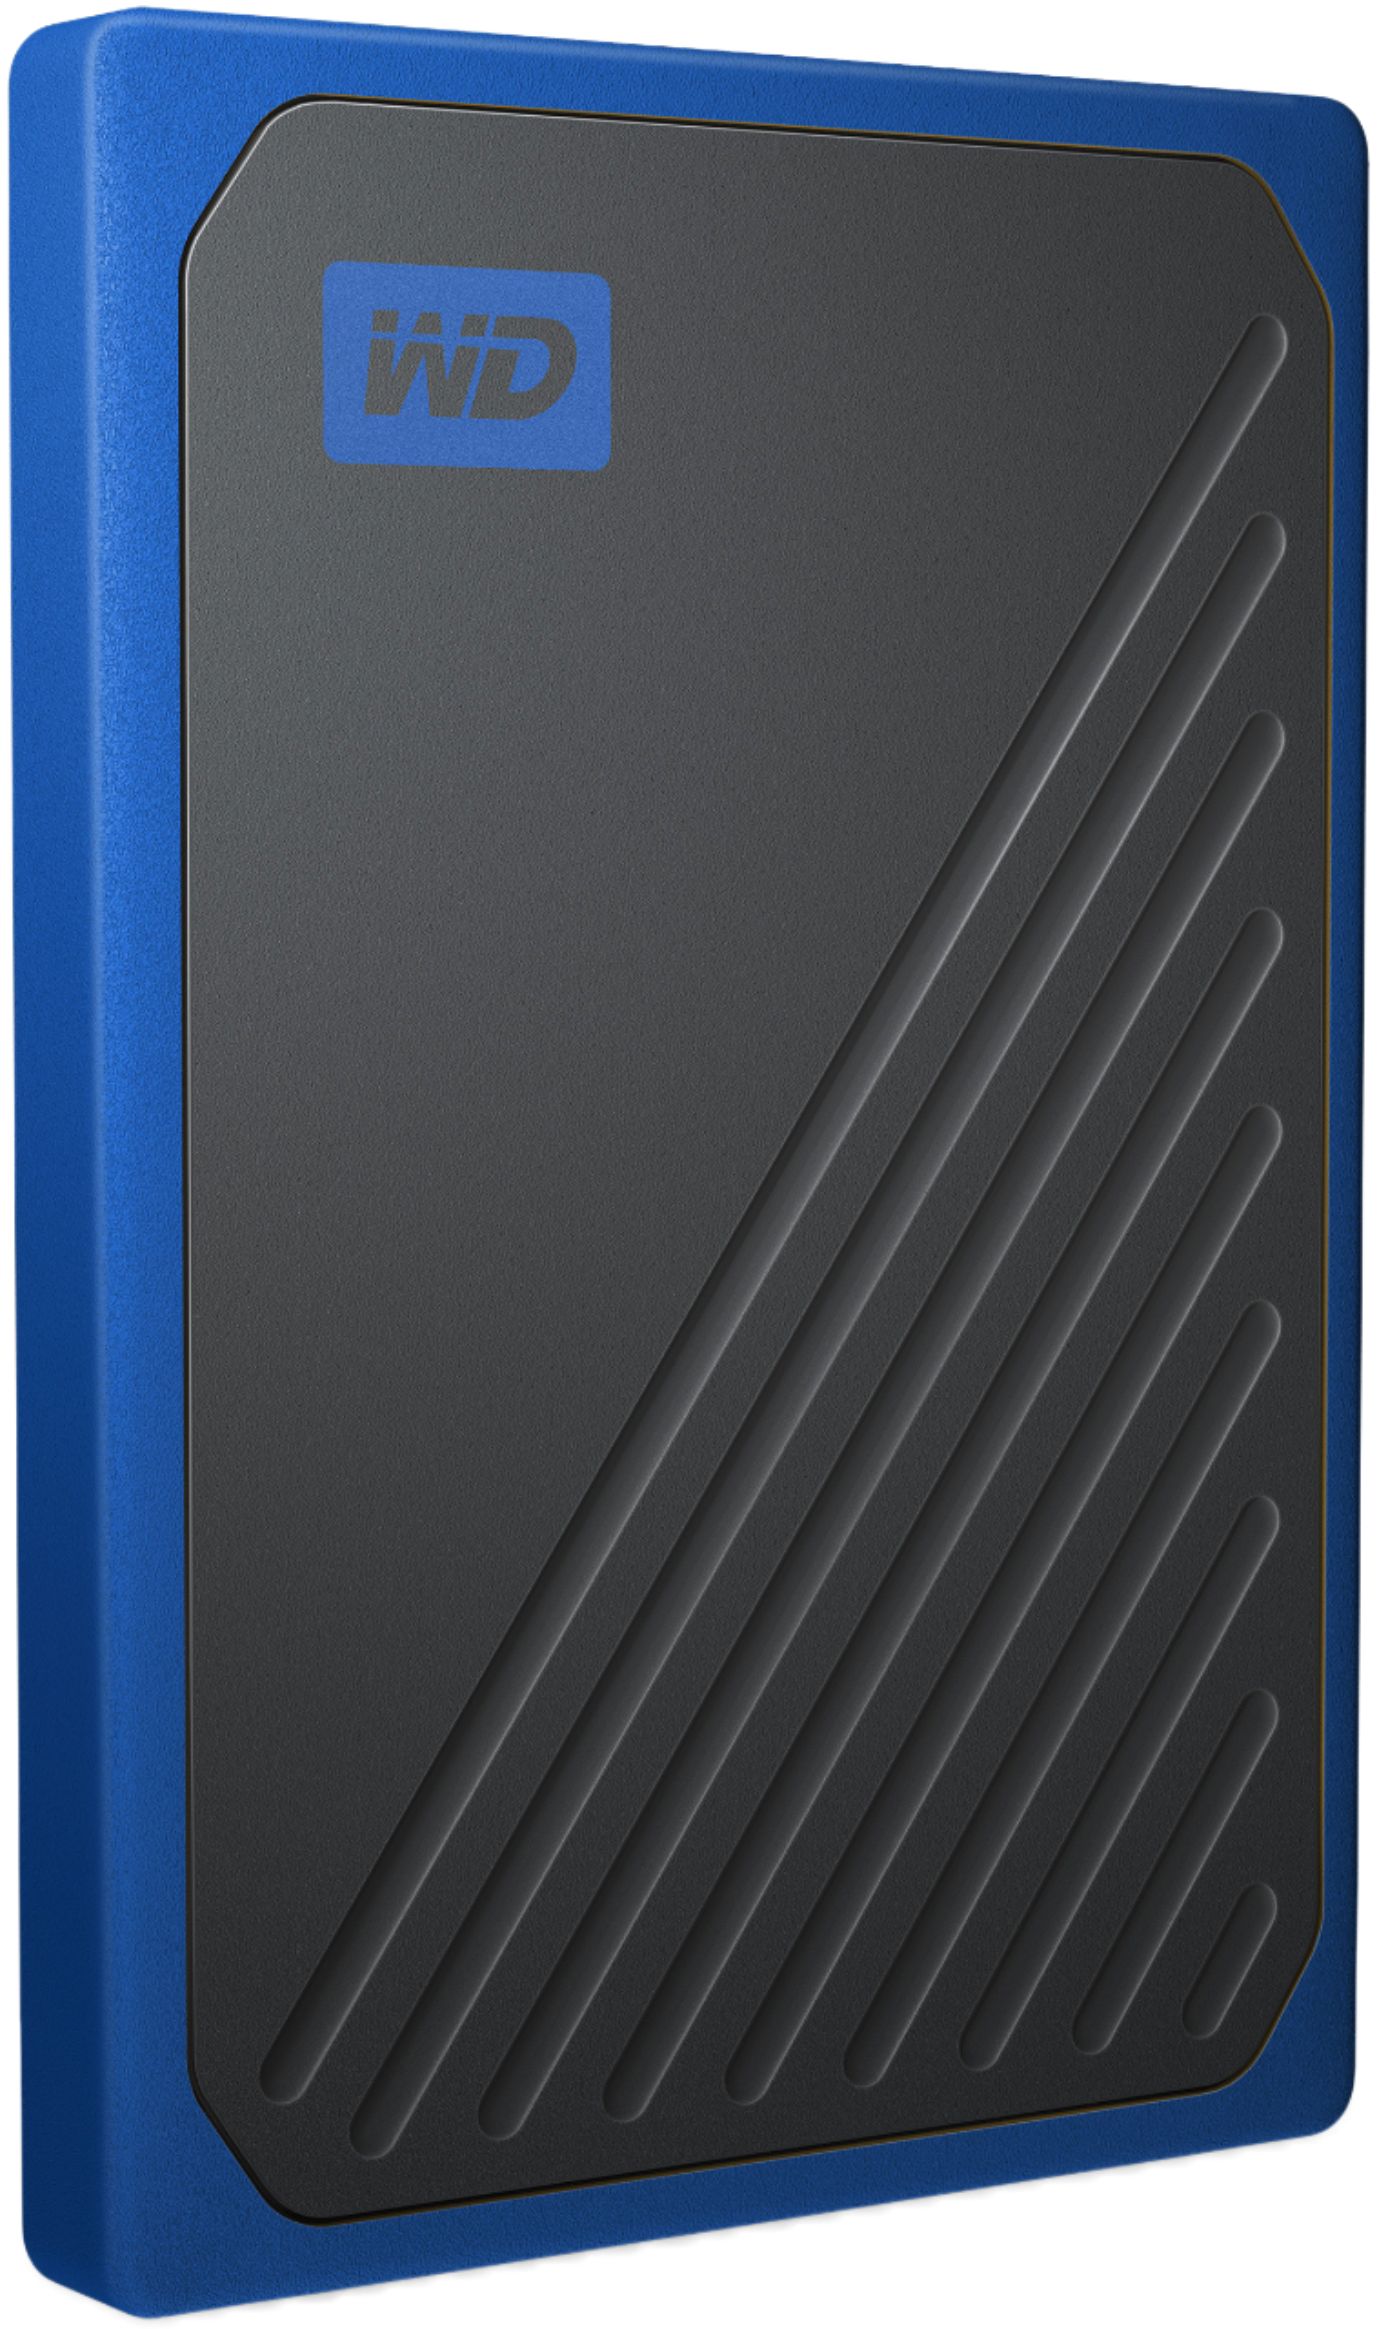 Angle View: PNY - PRO Elite 1TB USB 3.1 Flash Drive - 400MB/s - Gray